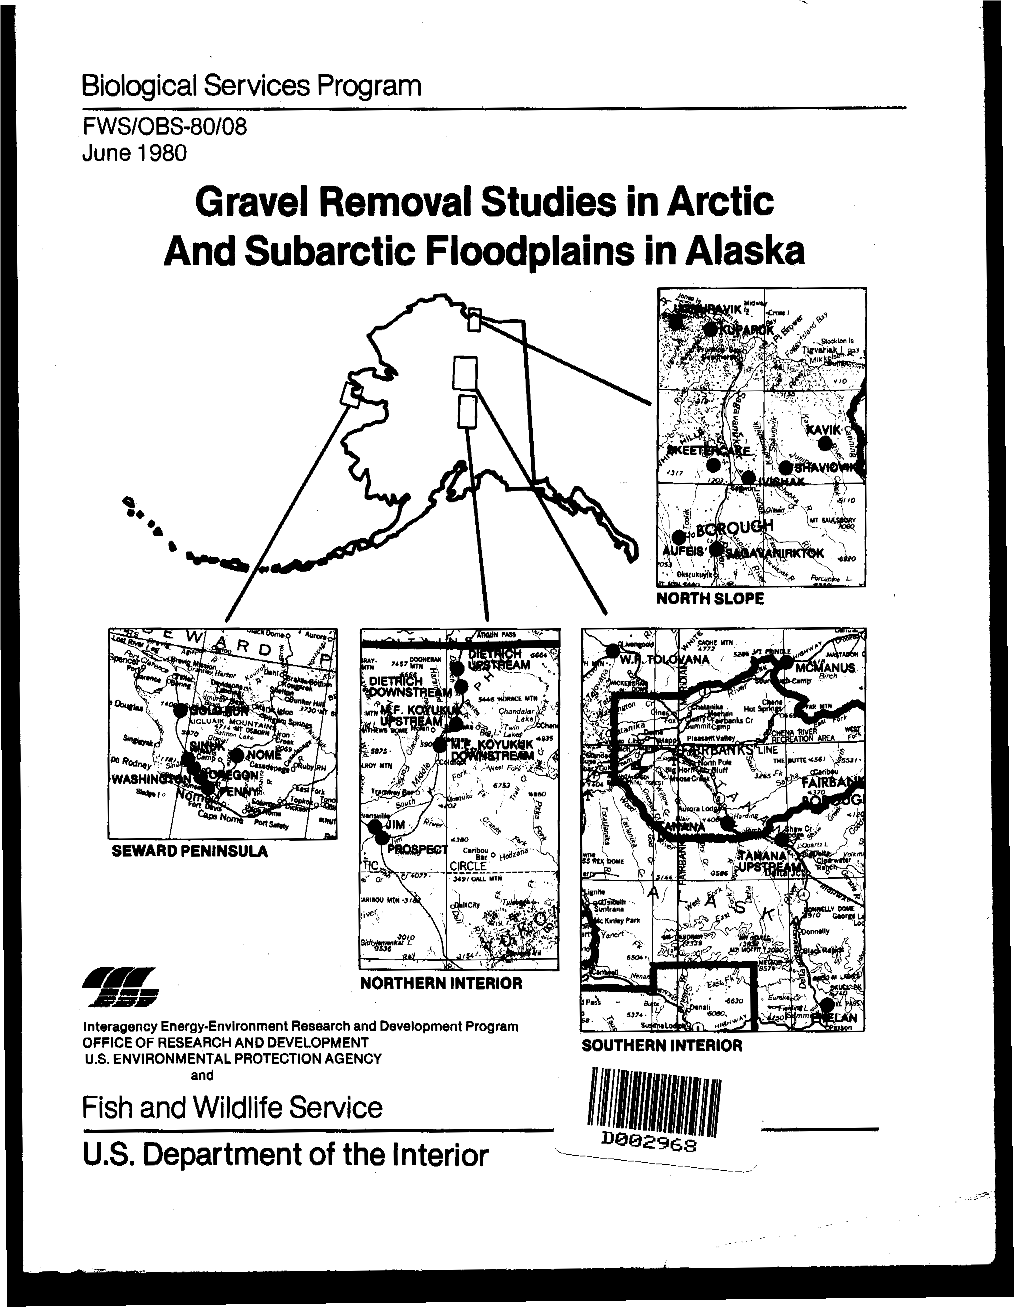 Gravel Removal Studies in Arctic and Subarctic Floodplains in Alaska